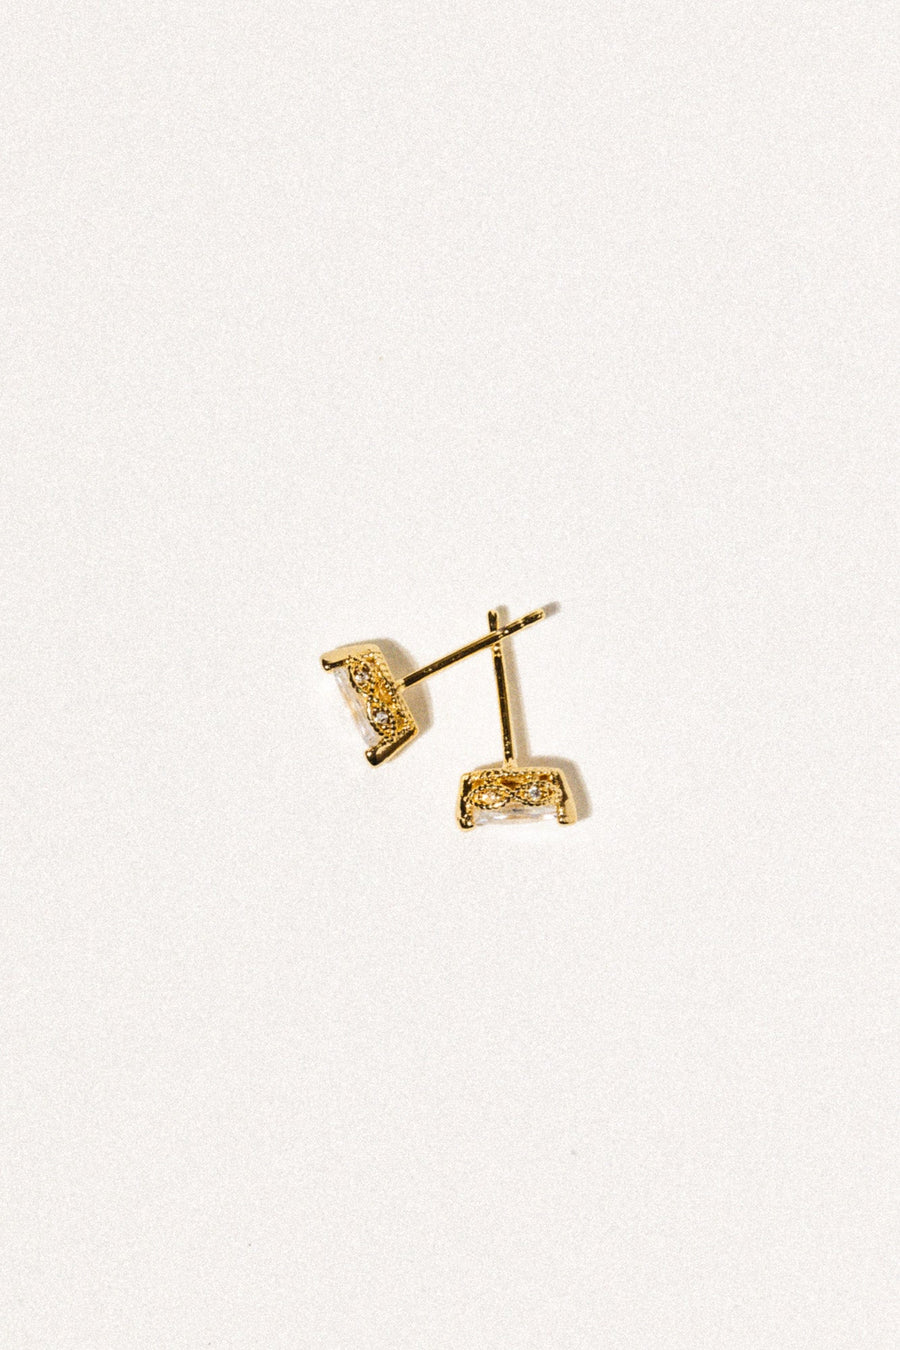 Dona Italia Jewelry Gold Celestial CZ Stud Earrings